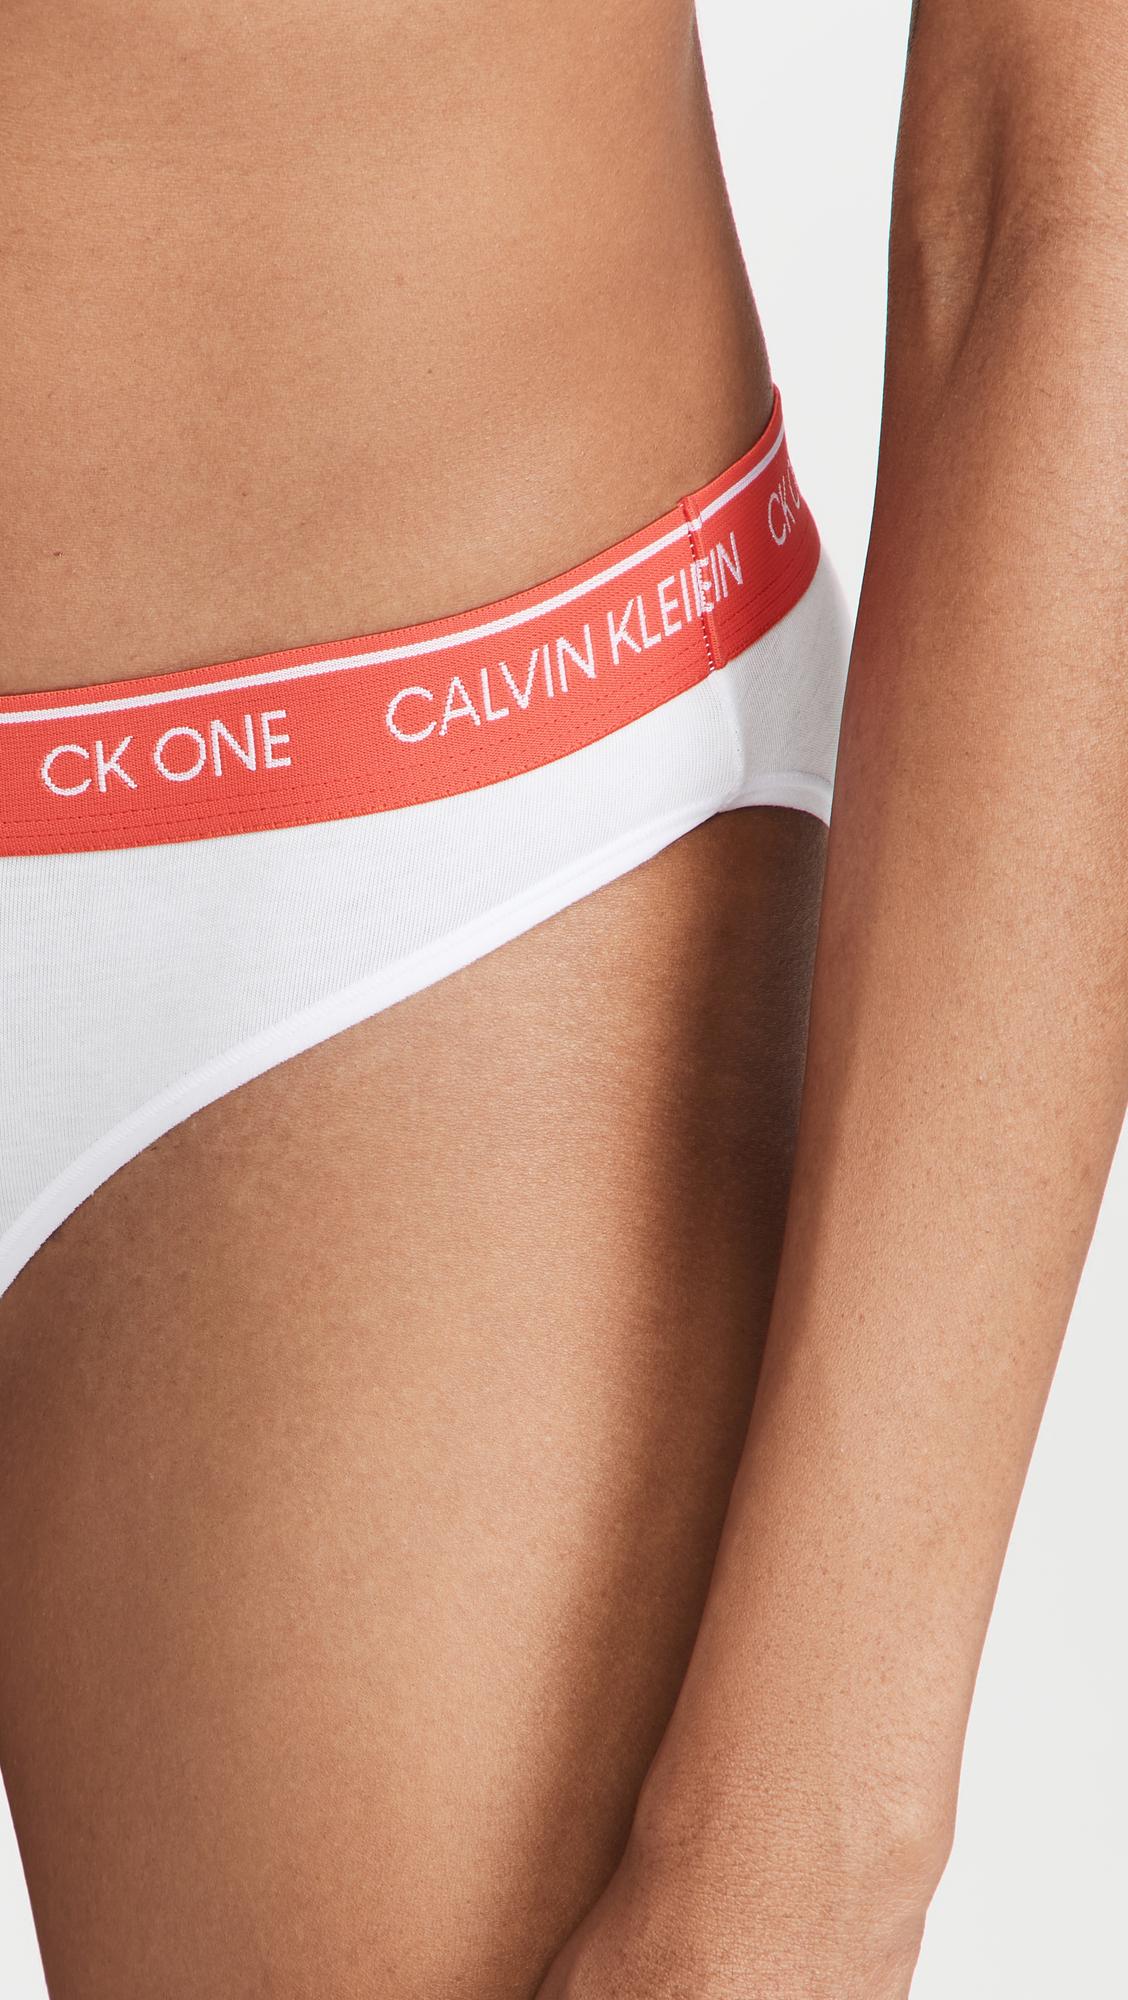 Briefs Calvin Klein CK ONE Thong 7 Pack